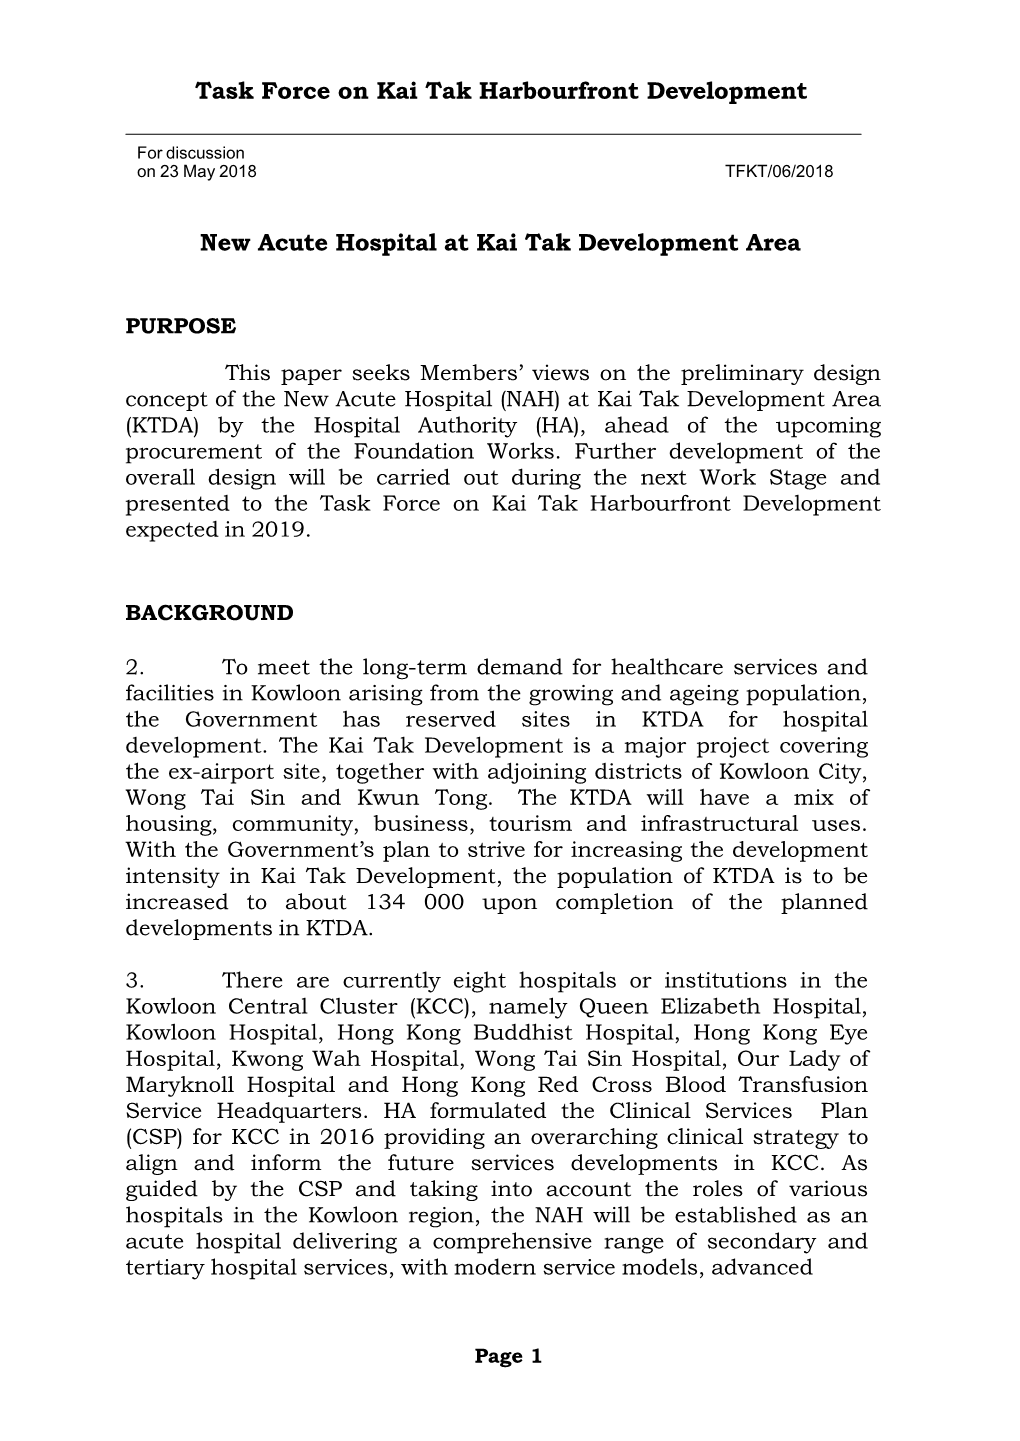 New Acute Hospital at Kai Tak Development Area